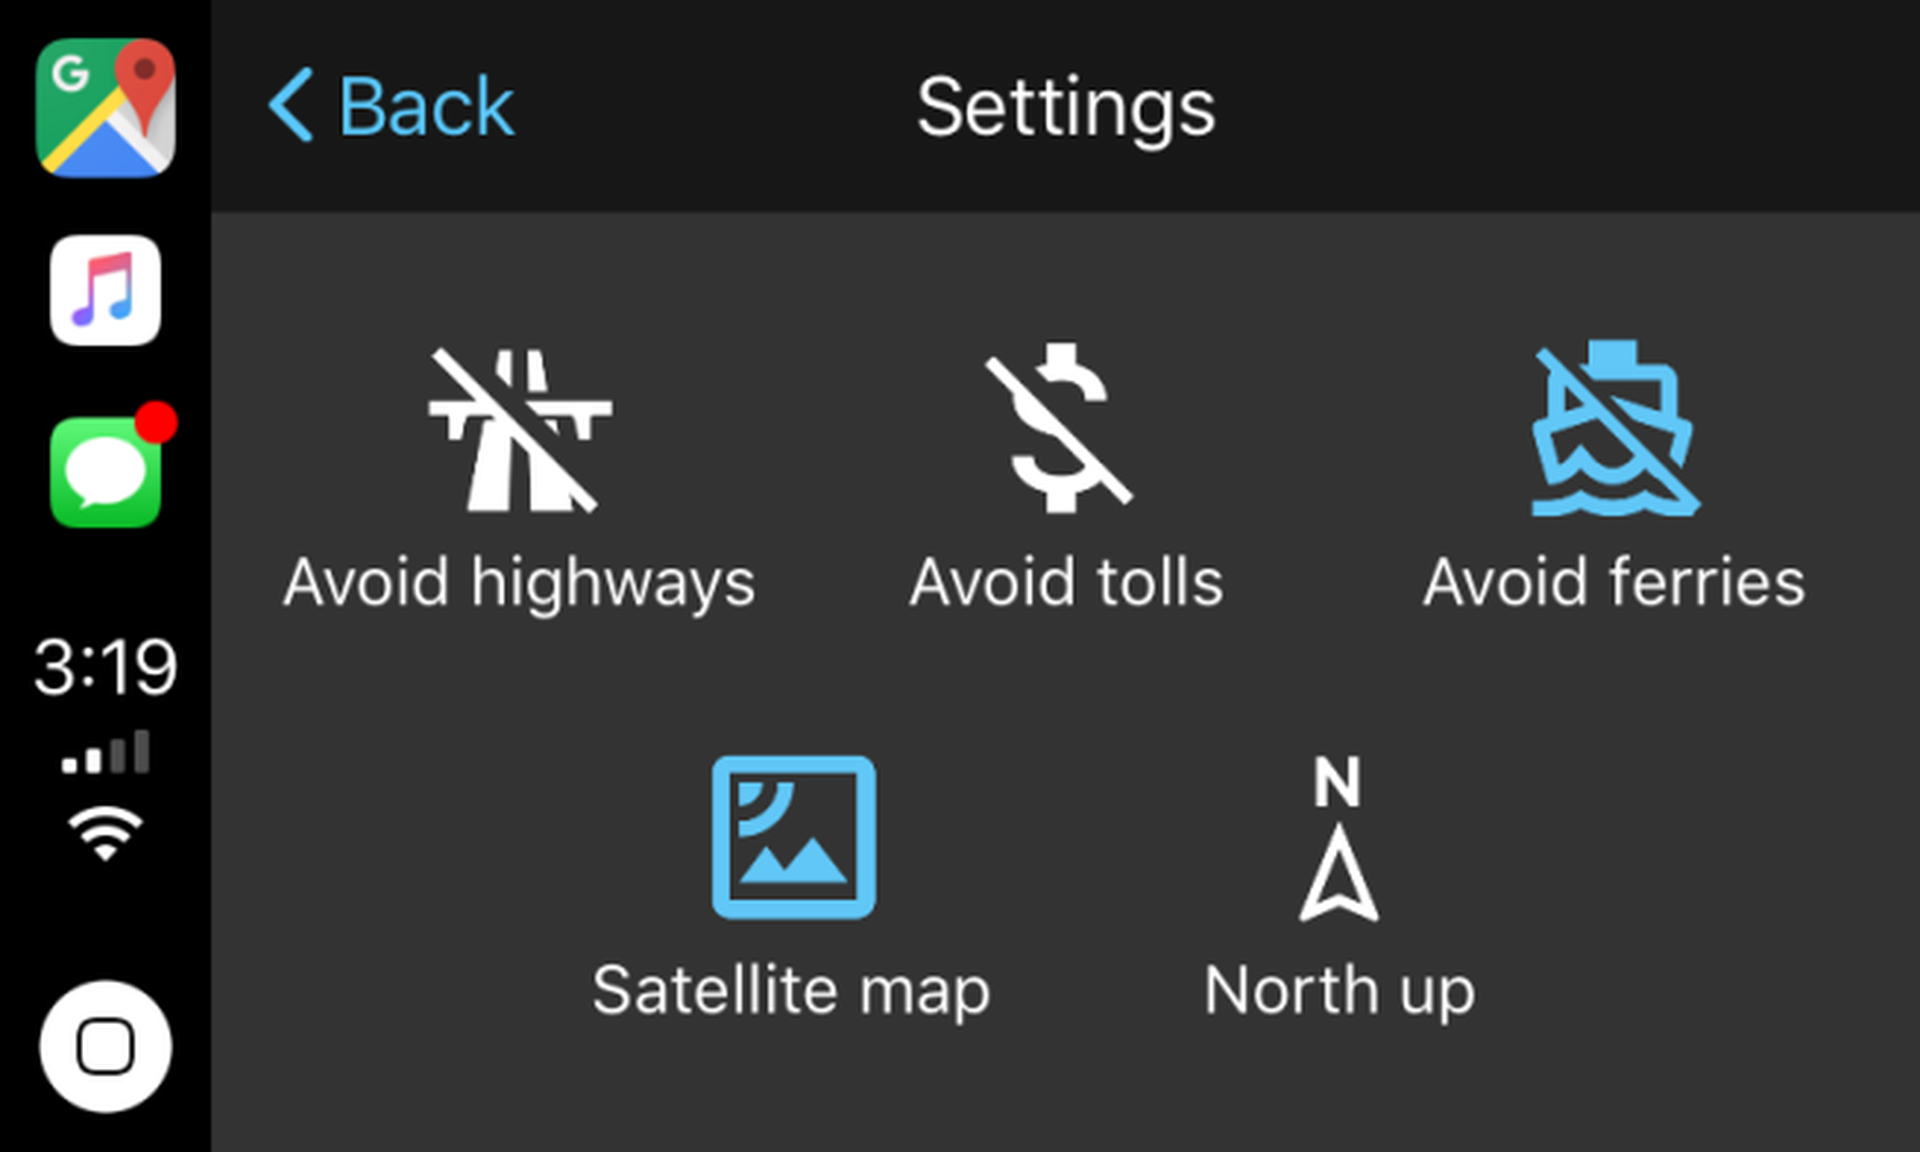 Google Maps en Apple CarPlay